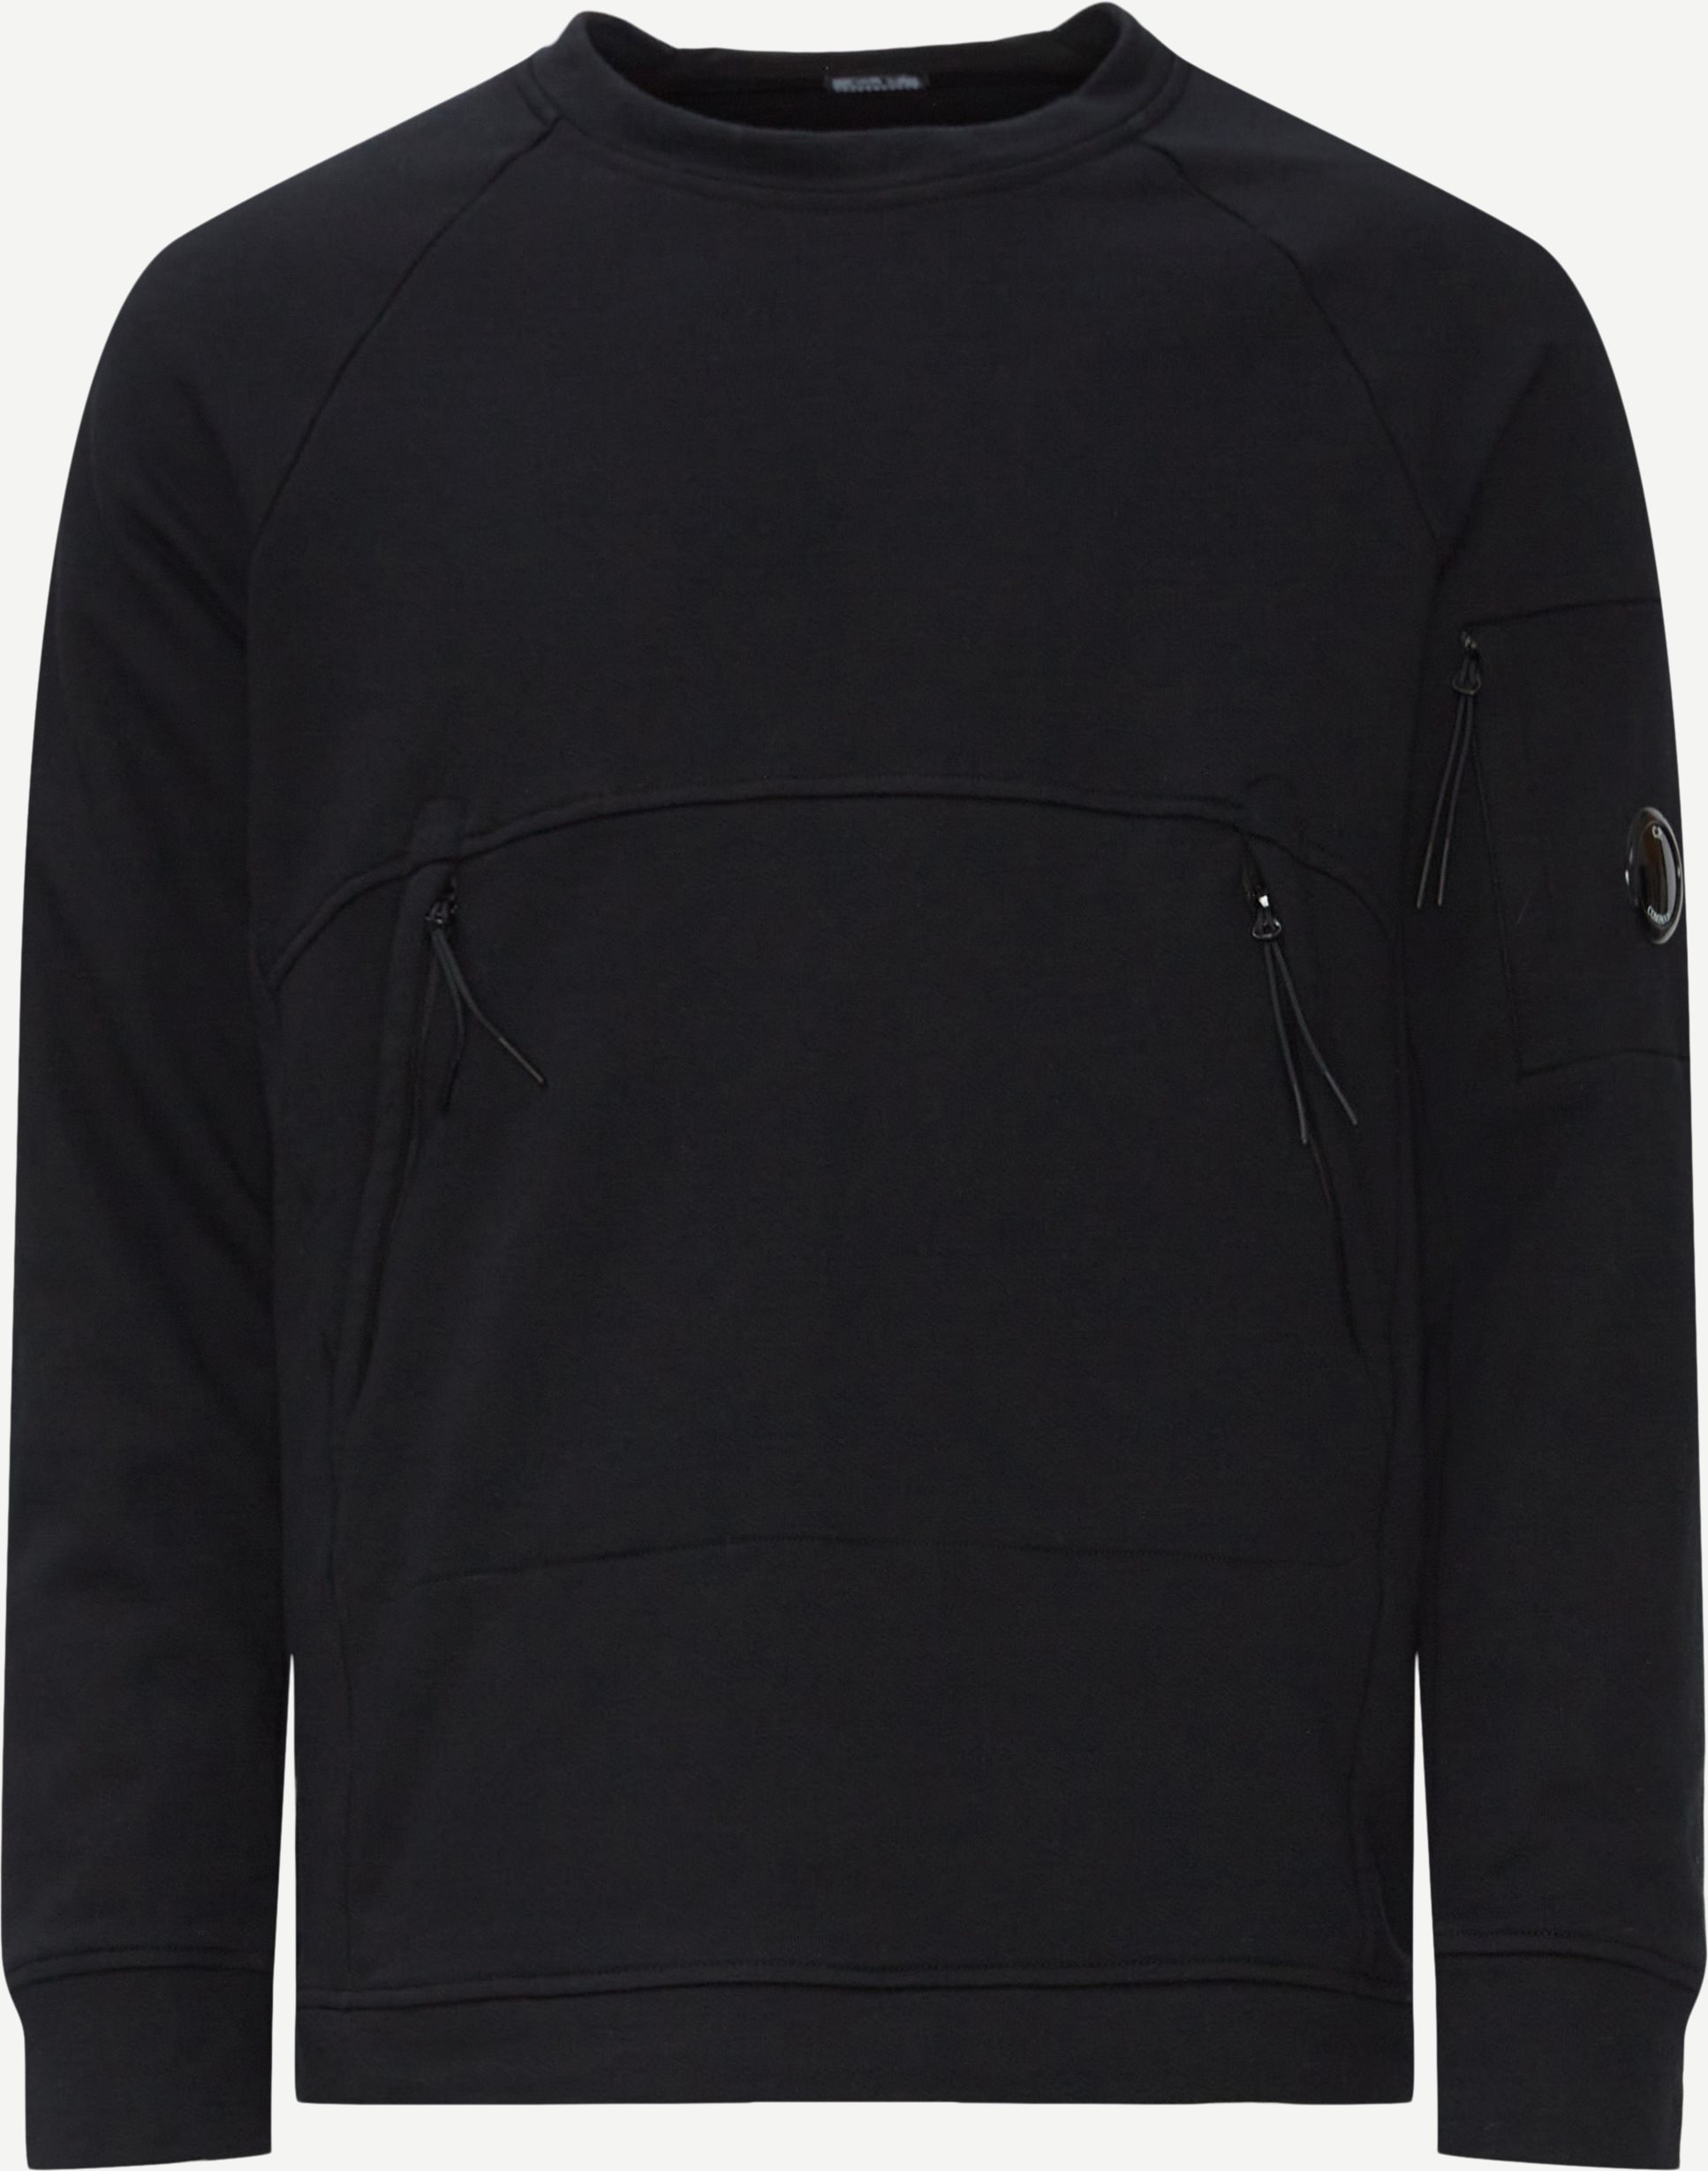 Sweatshirts - Custom fit - Black